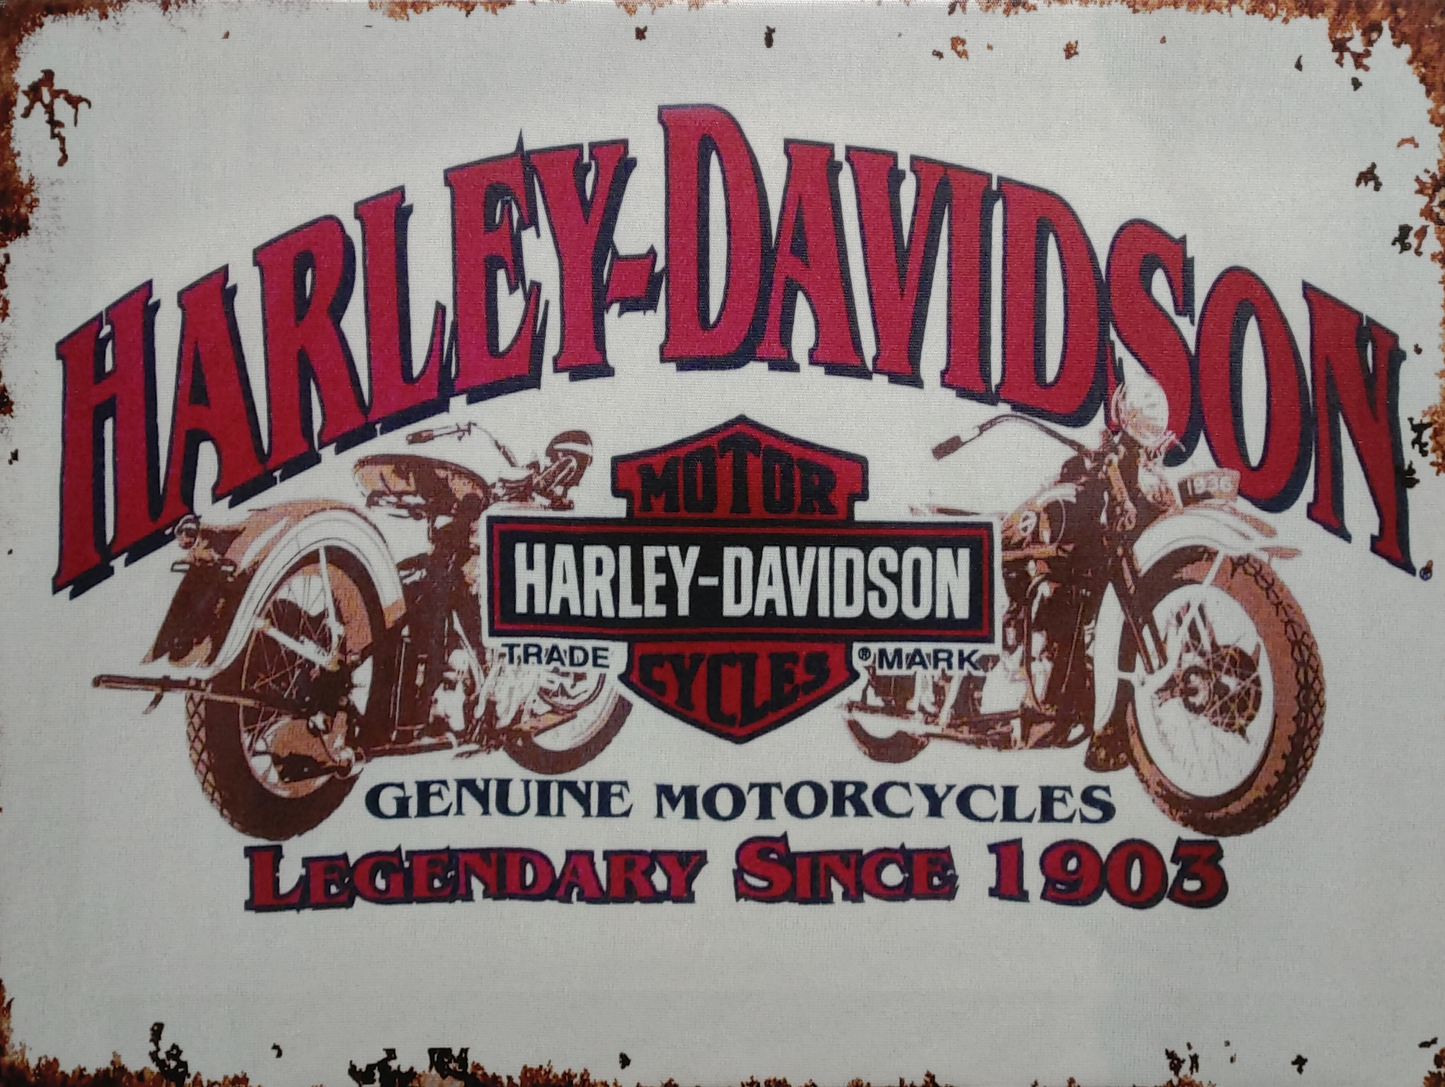 HARLEY-DAVIDSON GENUINE MOTORCYCLES CANVAS PRINT